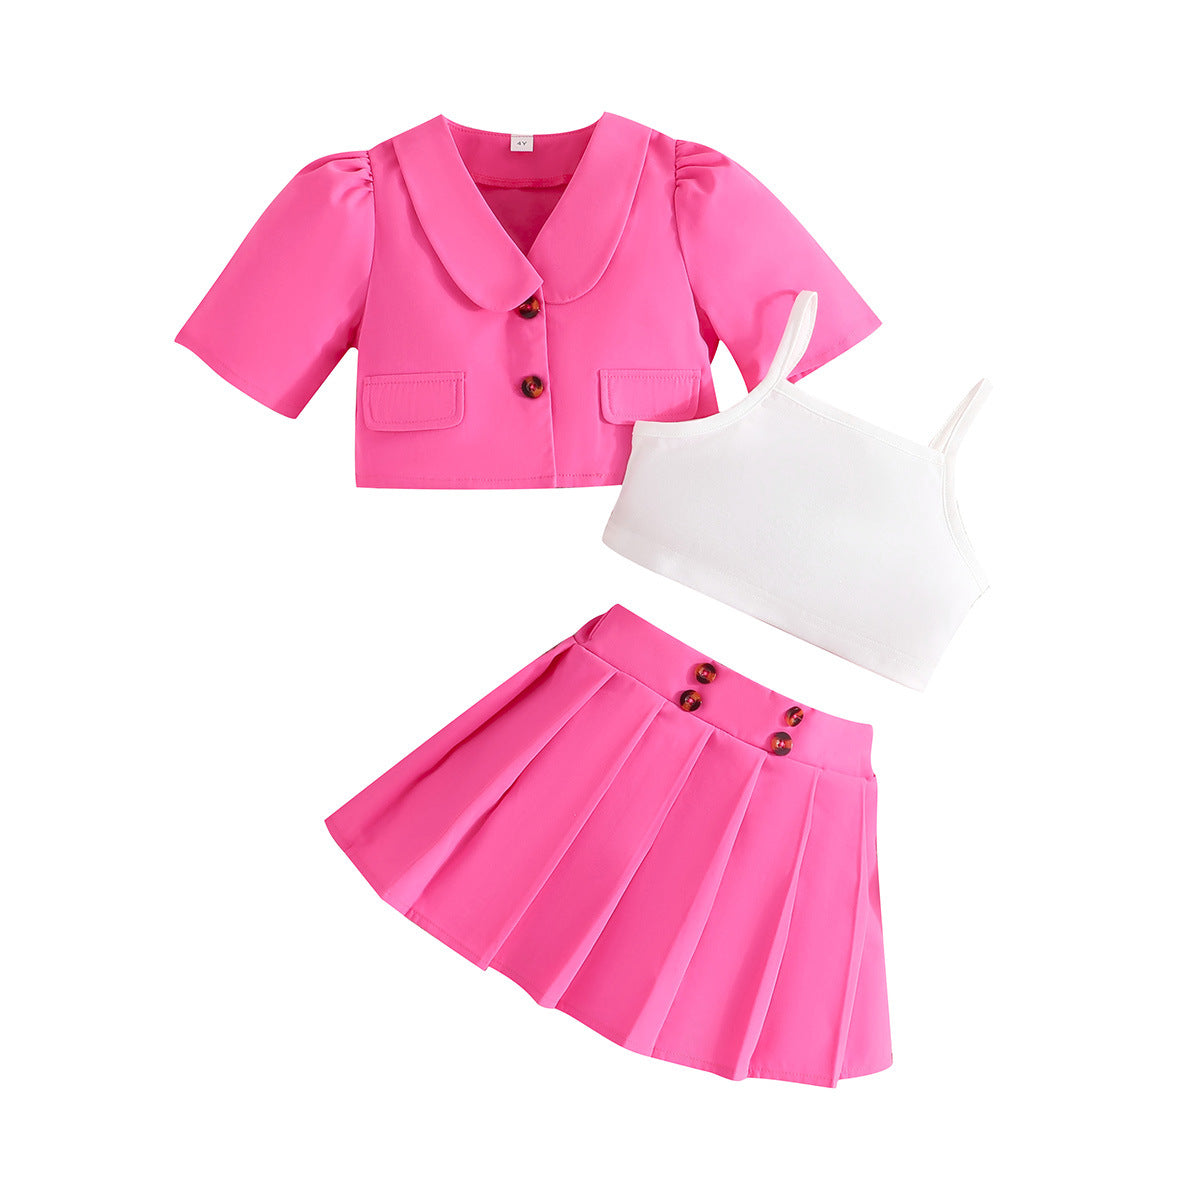 Blazer Style Jacket, Cami Top & Button Detail Pleated Skirt Set.